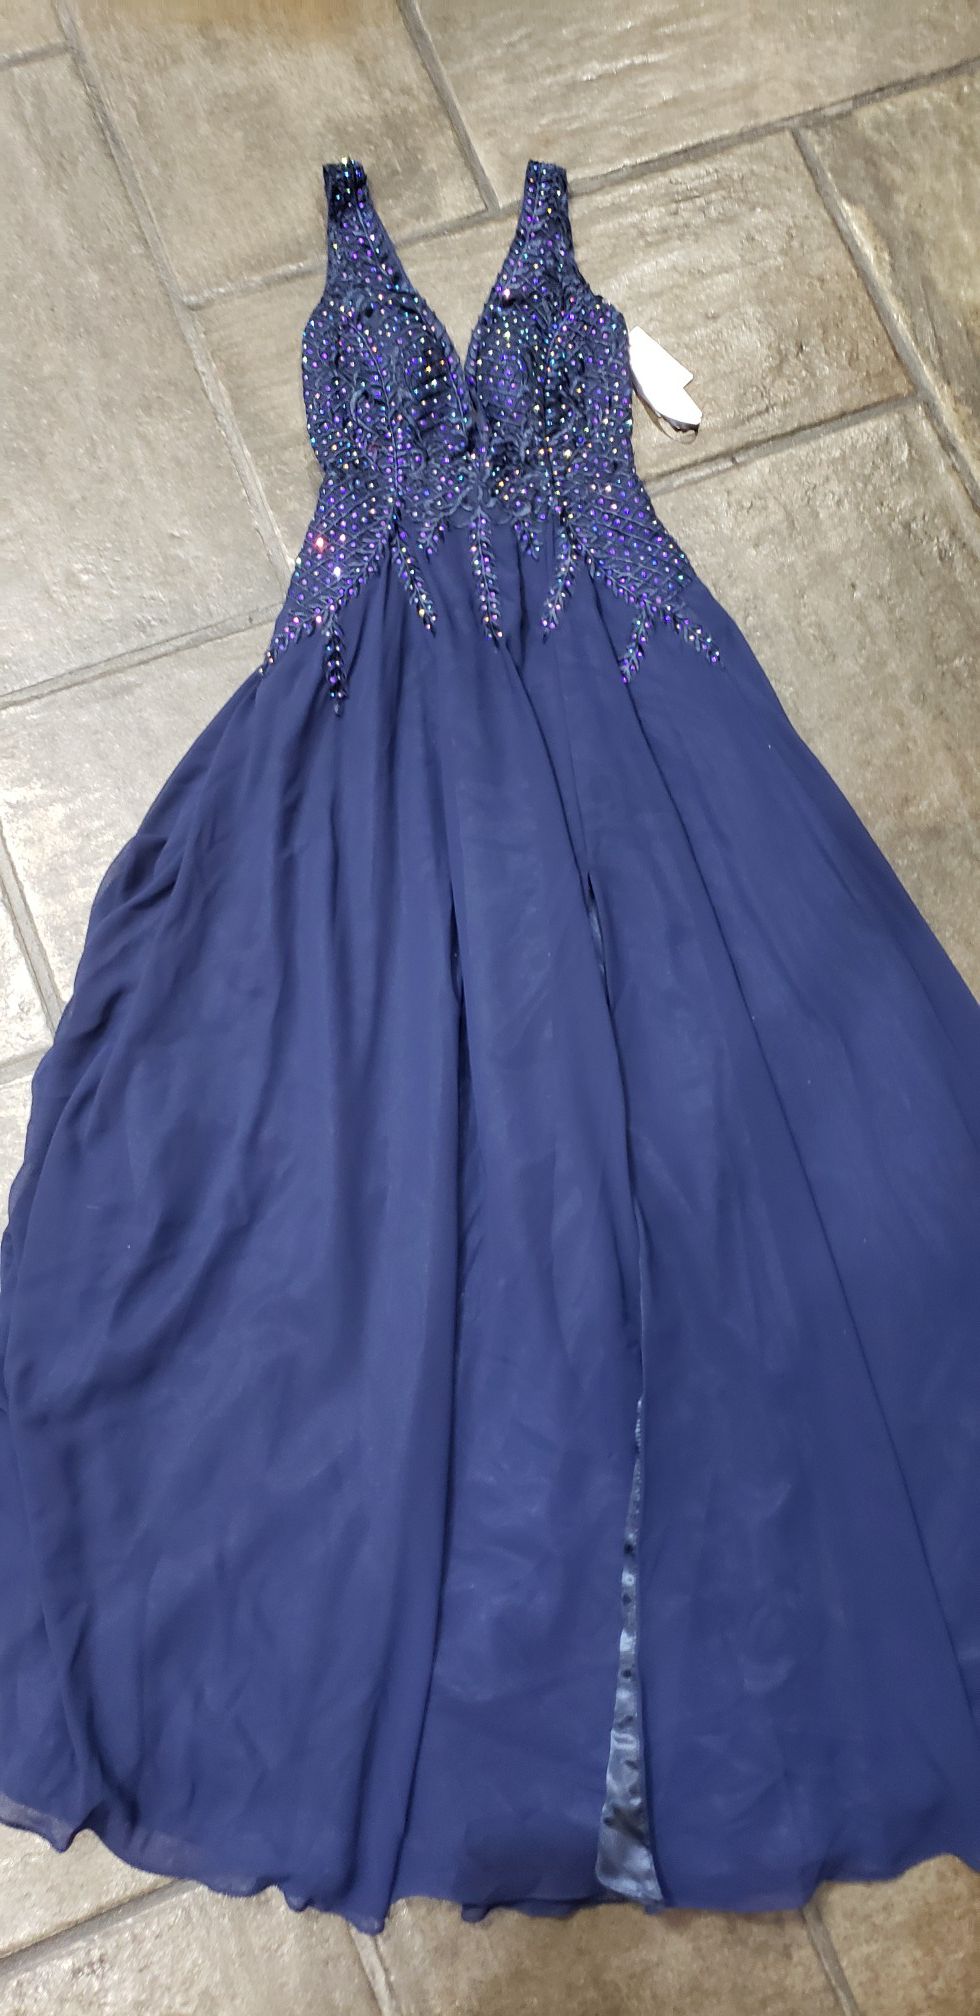 GB dress size 1